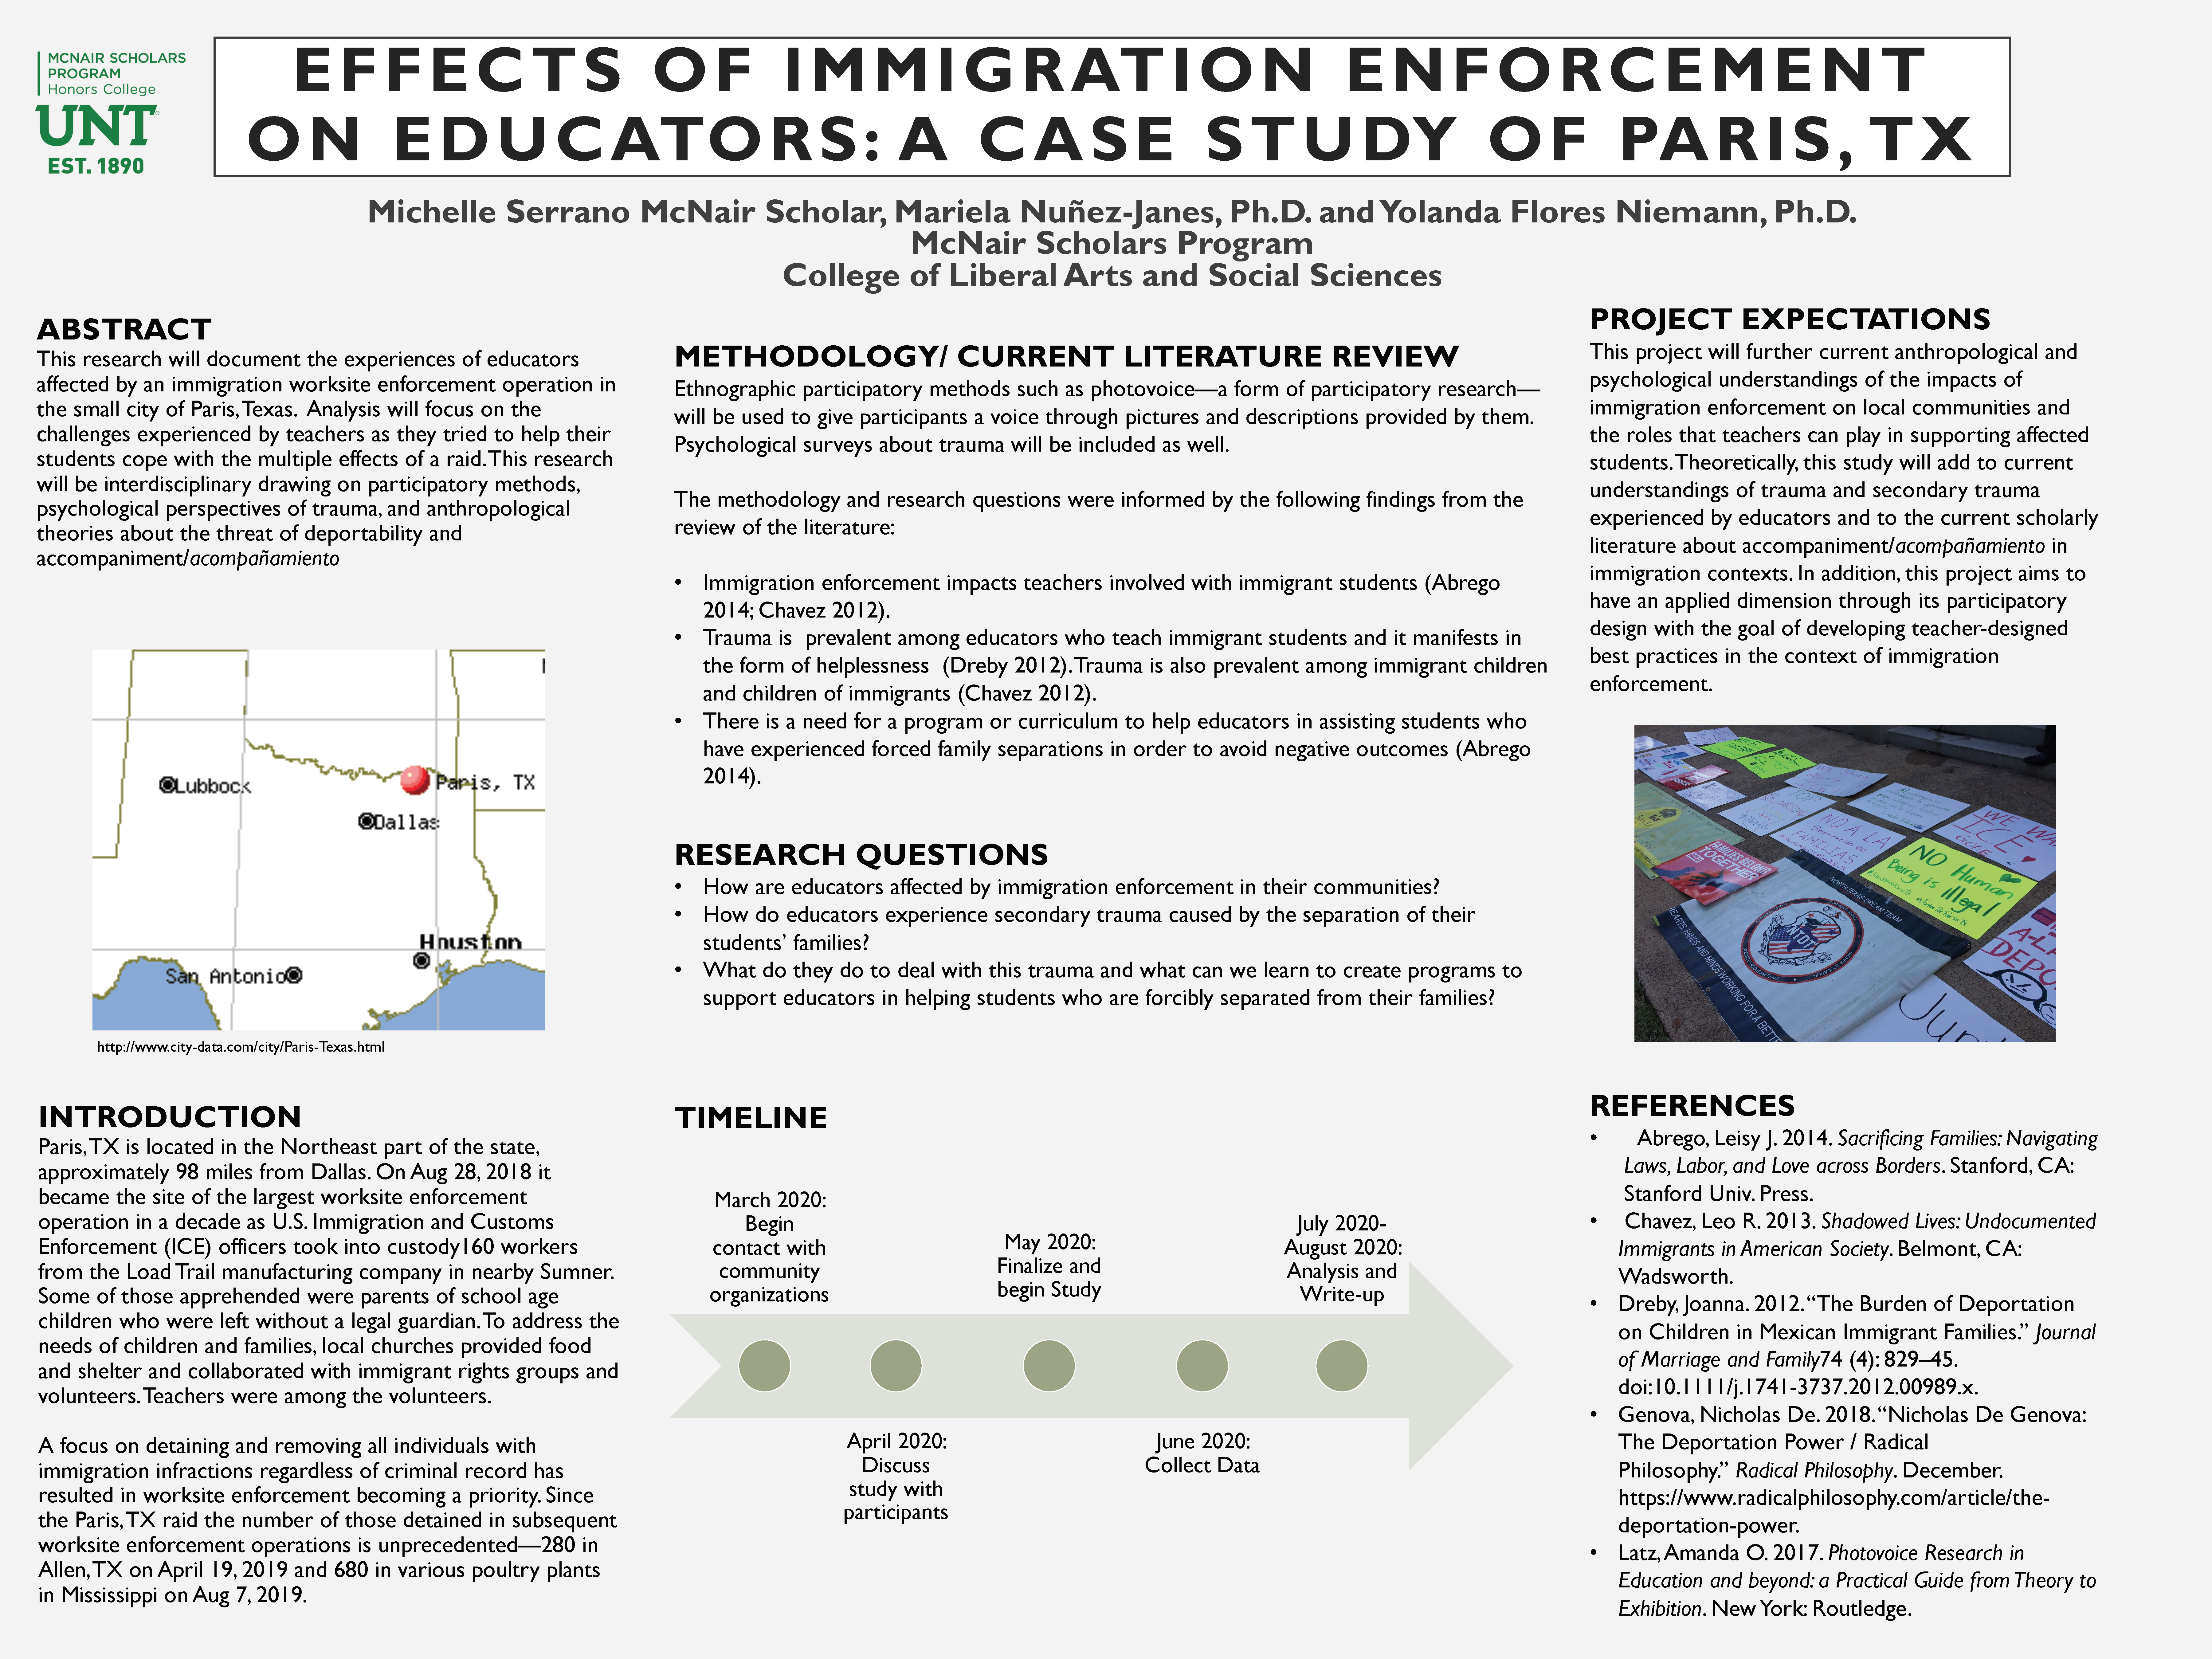 The Effects of Immigration Enforcement on Educators: A Case Study of Paris, TX